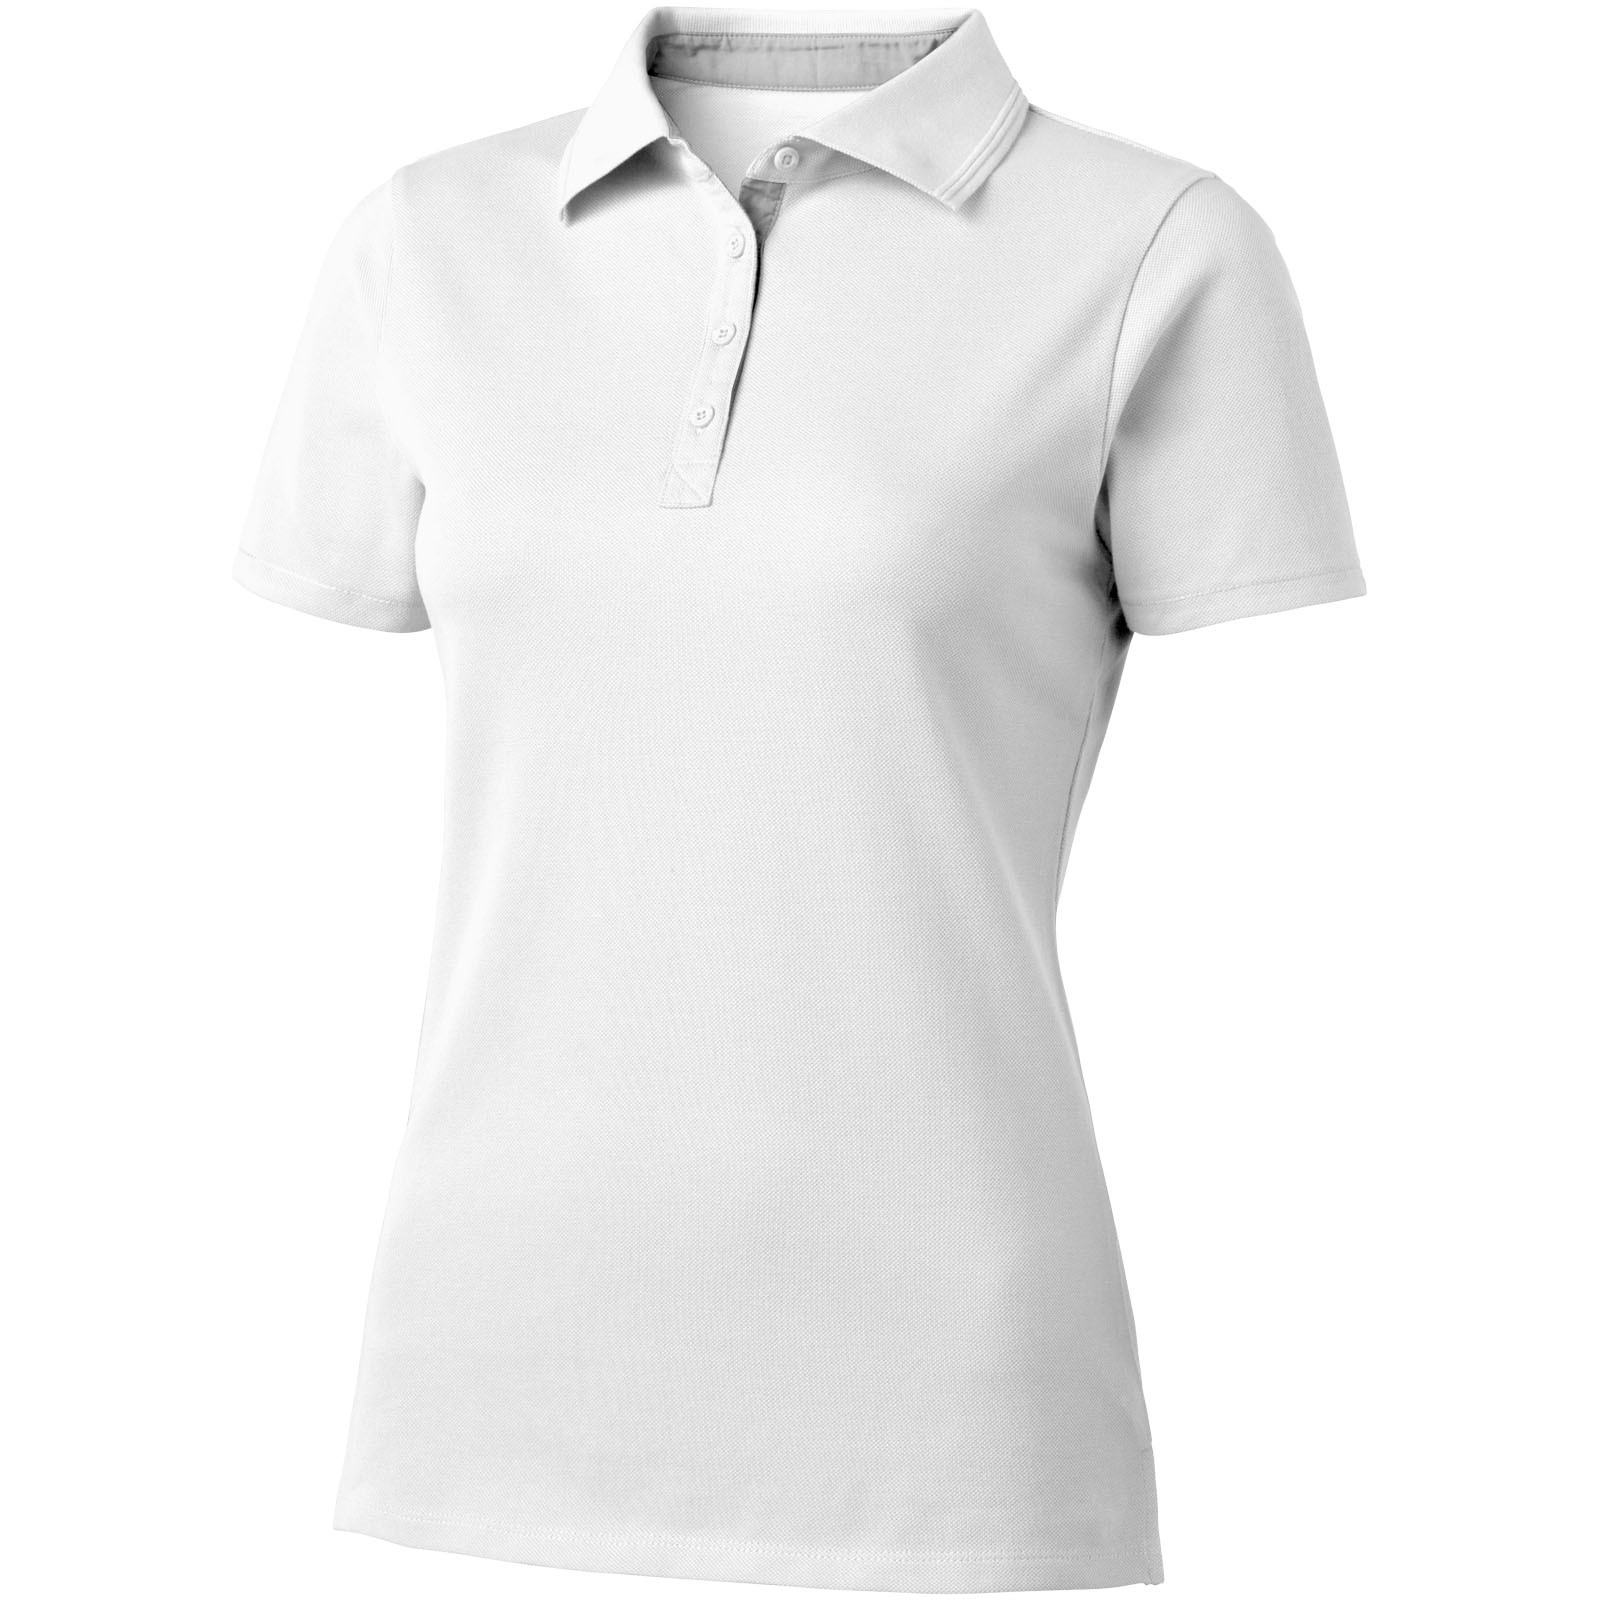 Hacker short sleeve ladies polo - White / Grey / M